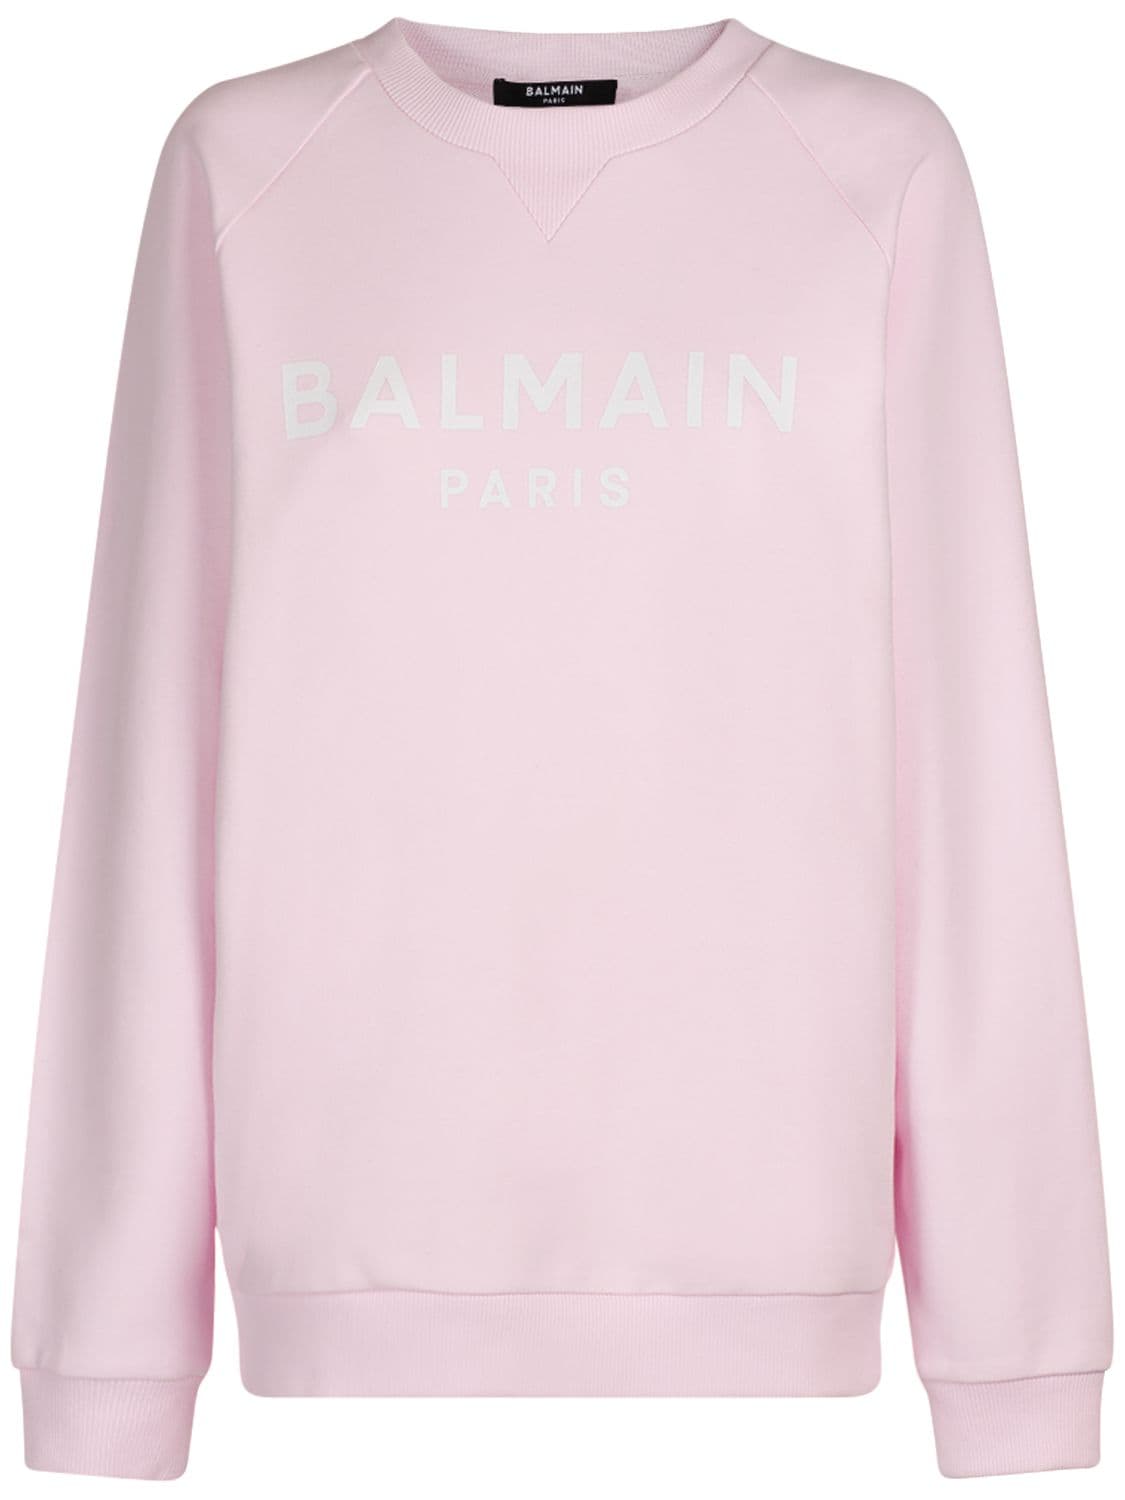 BALMAIN Logo Printed Organic Cotton Sweatshirt